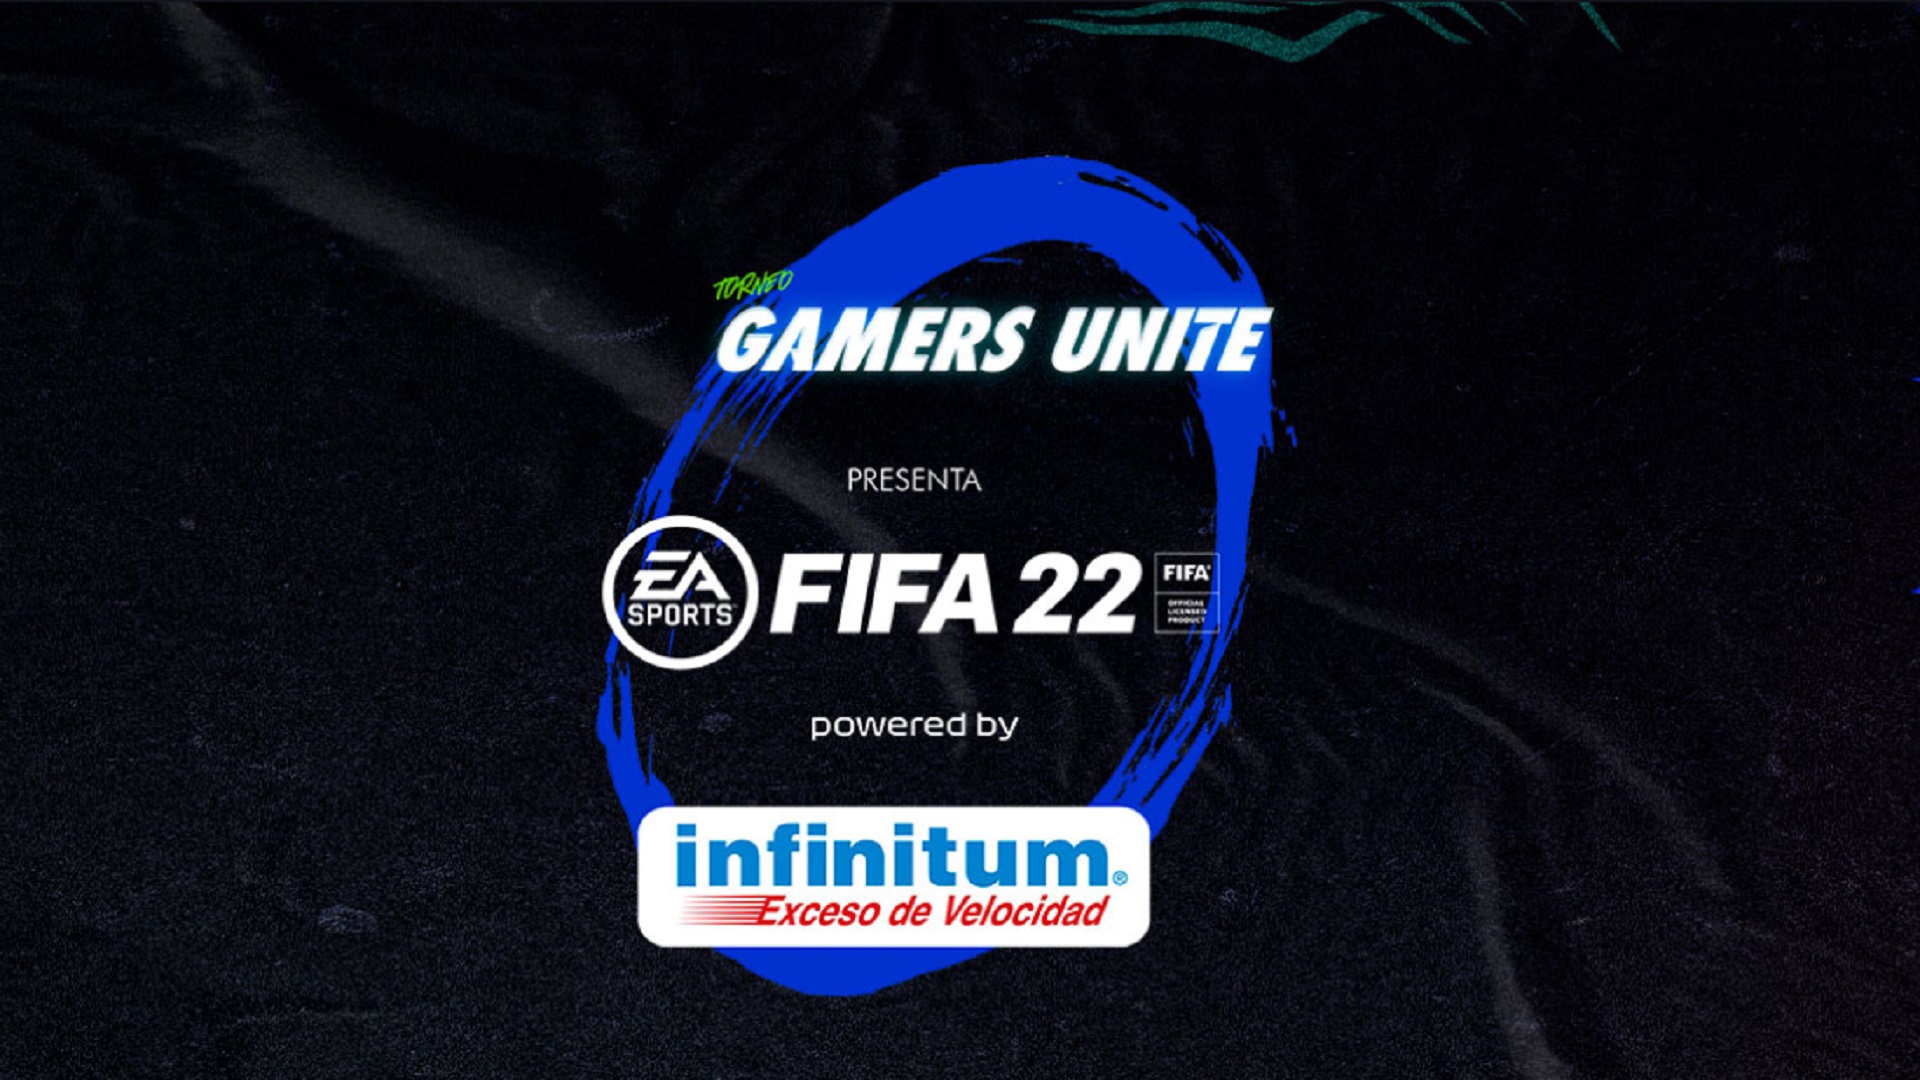 Torneo Gamers Unite Fifa 22